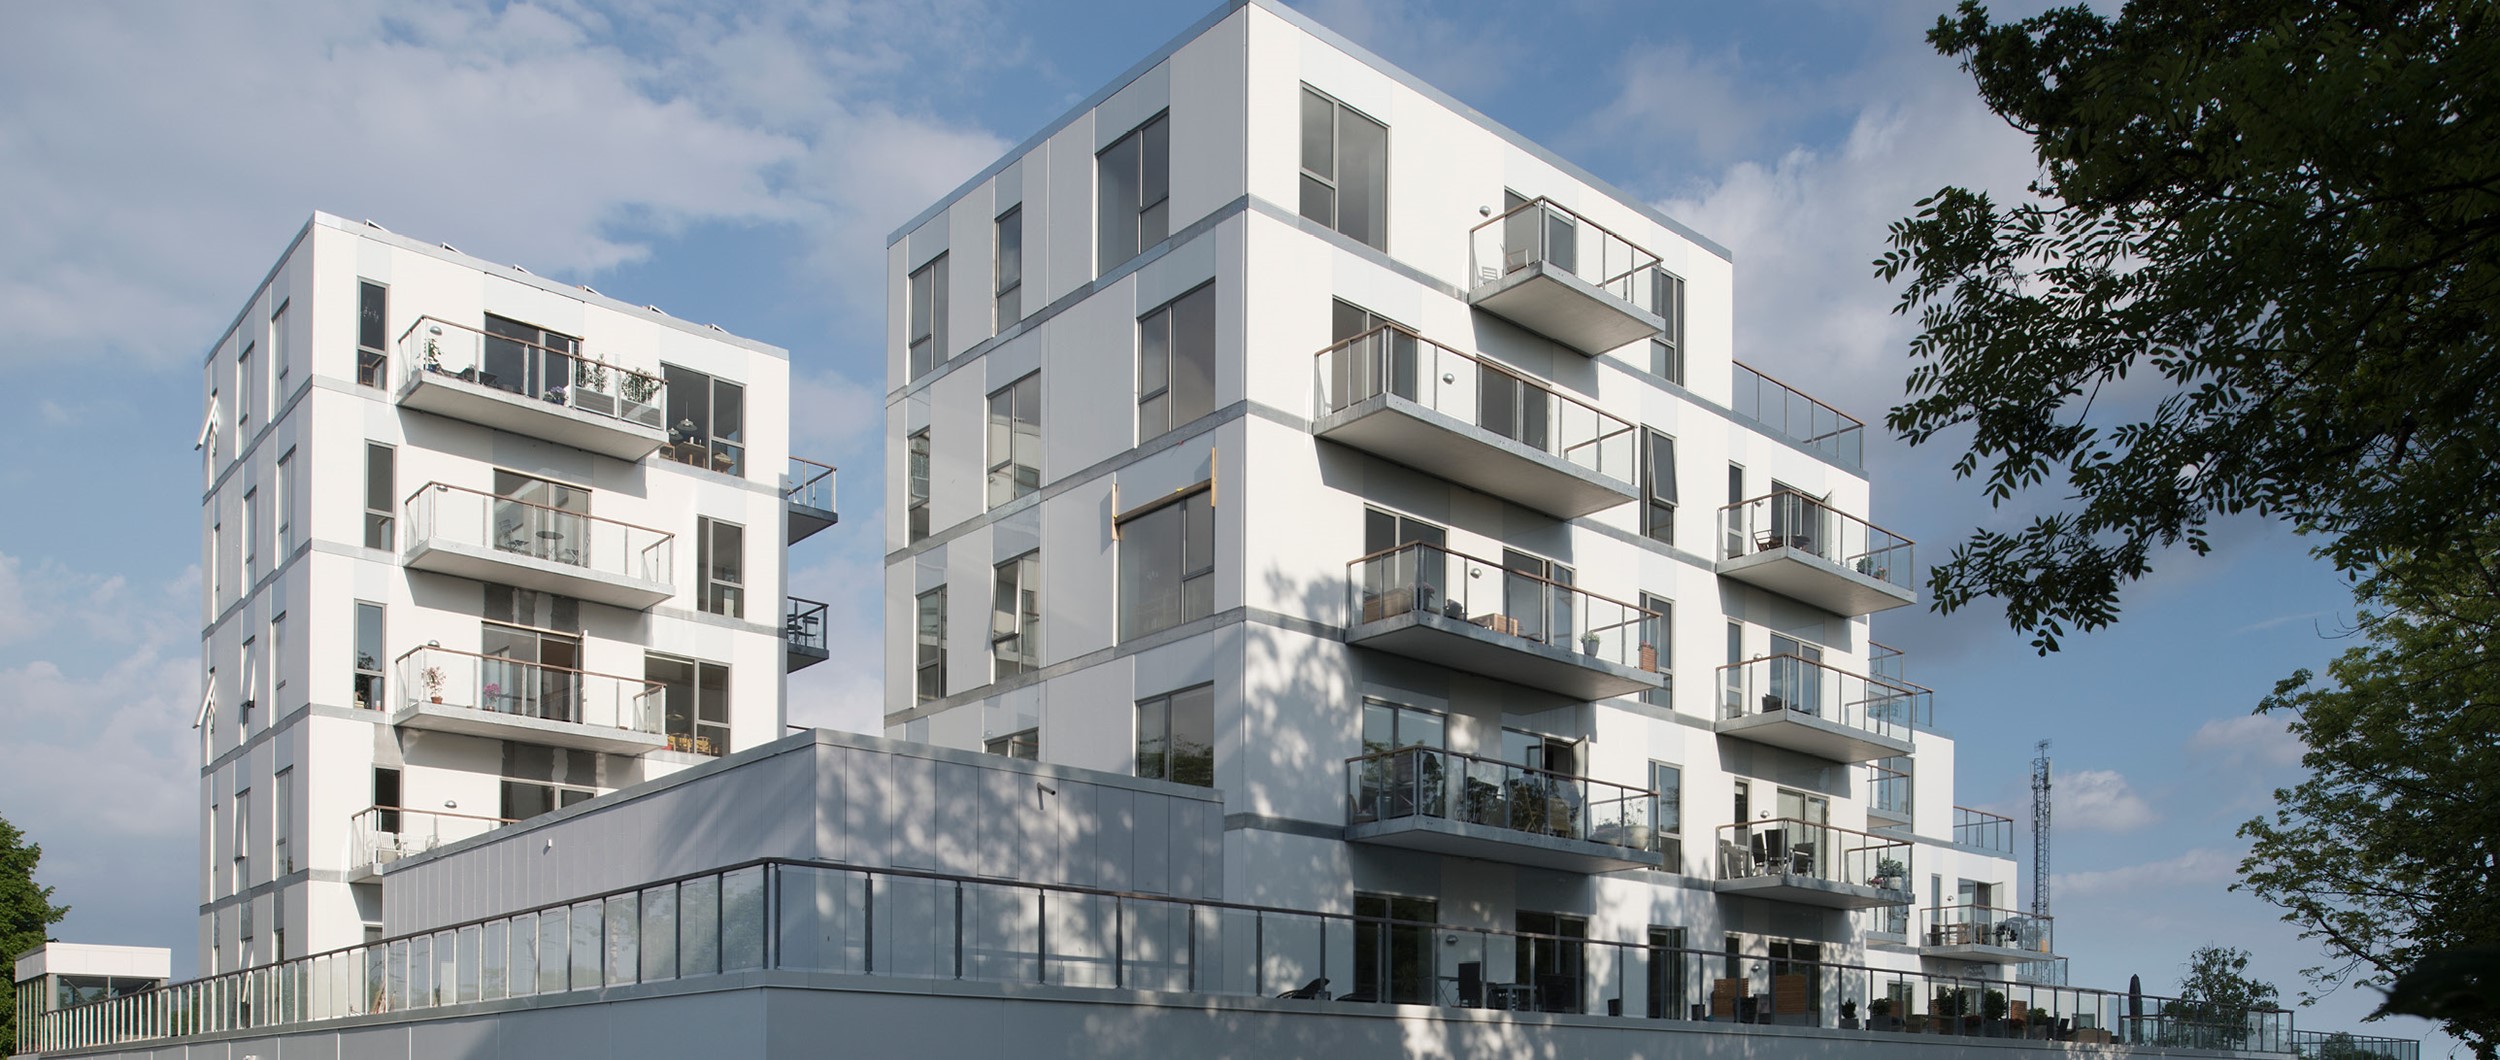 Genua House er et ”terrassehus” som knytter sig til en stolt dansk arkitektur tradition med lyse og venlige boliger med sans for detaljen og med høj bo-kvalitet.